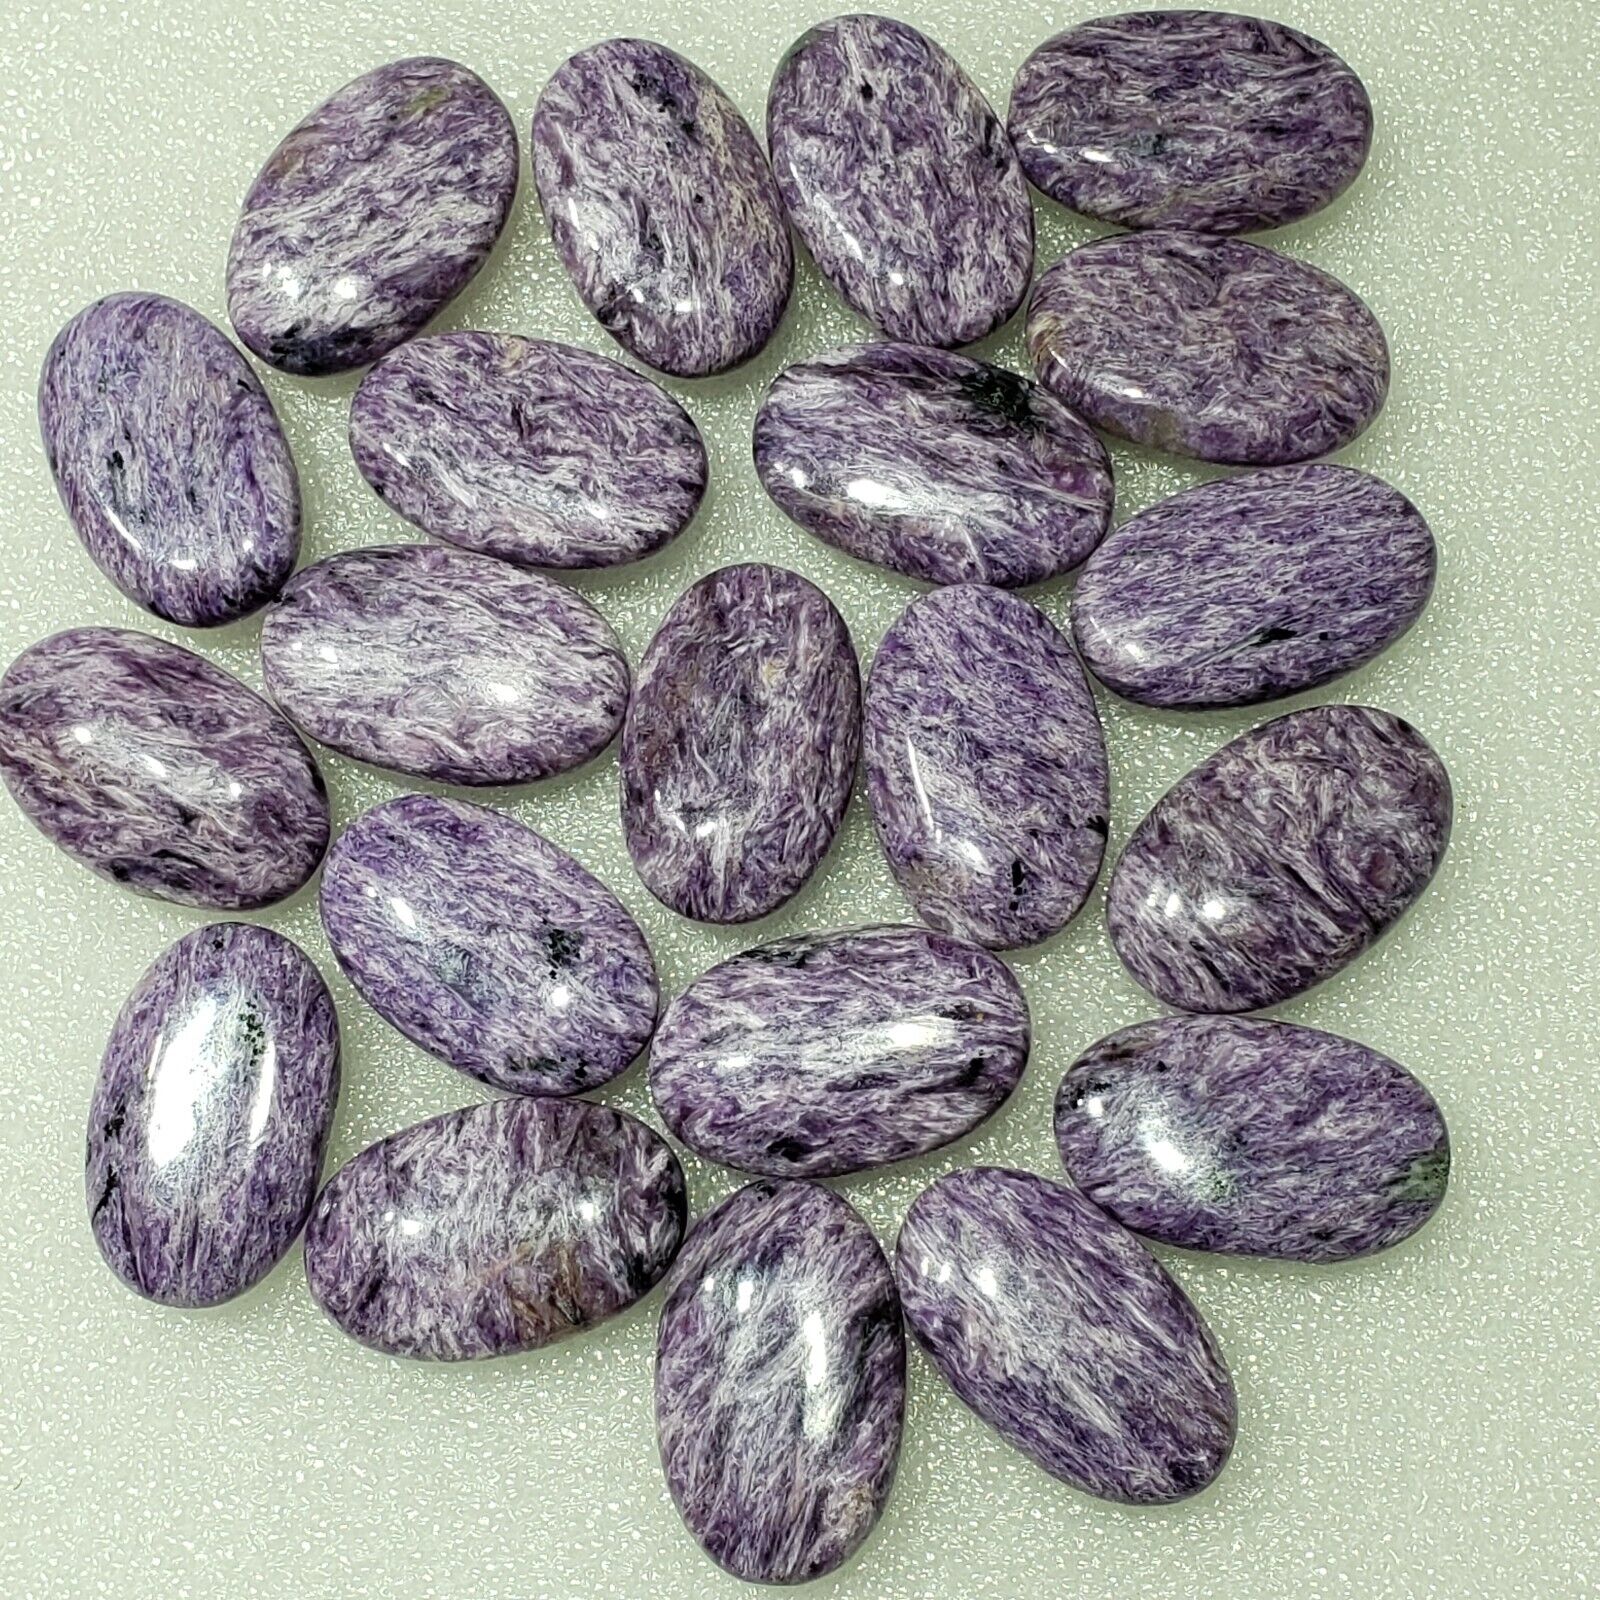 Polished Charoite Pocket Stone Soapstone size 25 x 40 mm